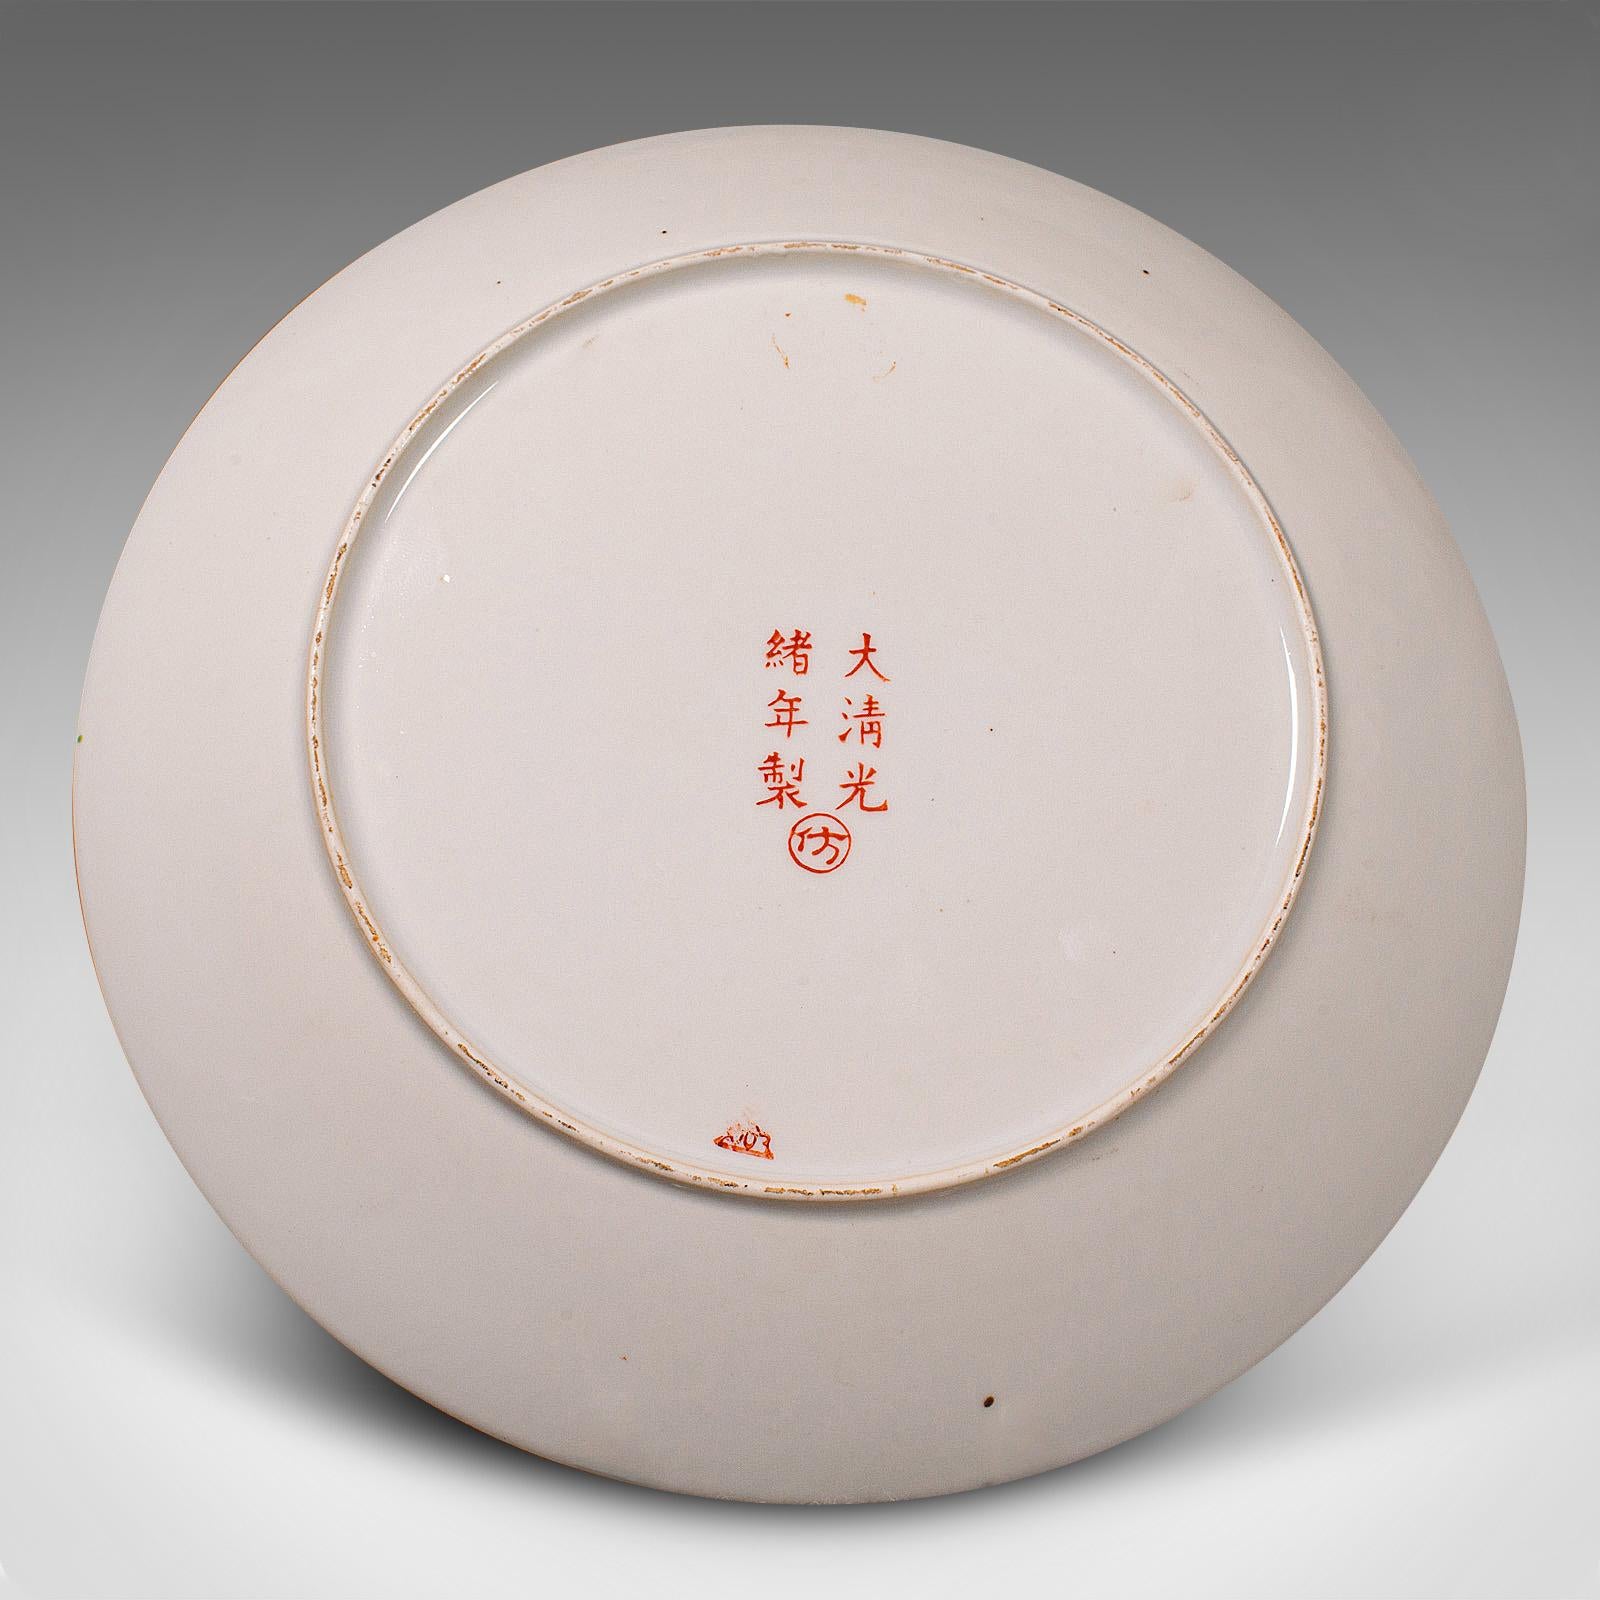 Ceramic Vintage Decorative Bird Plate, Chinese, Display Dish, Golden Pheasant, Art Deco For Sale